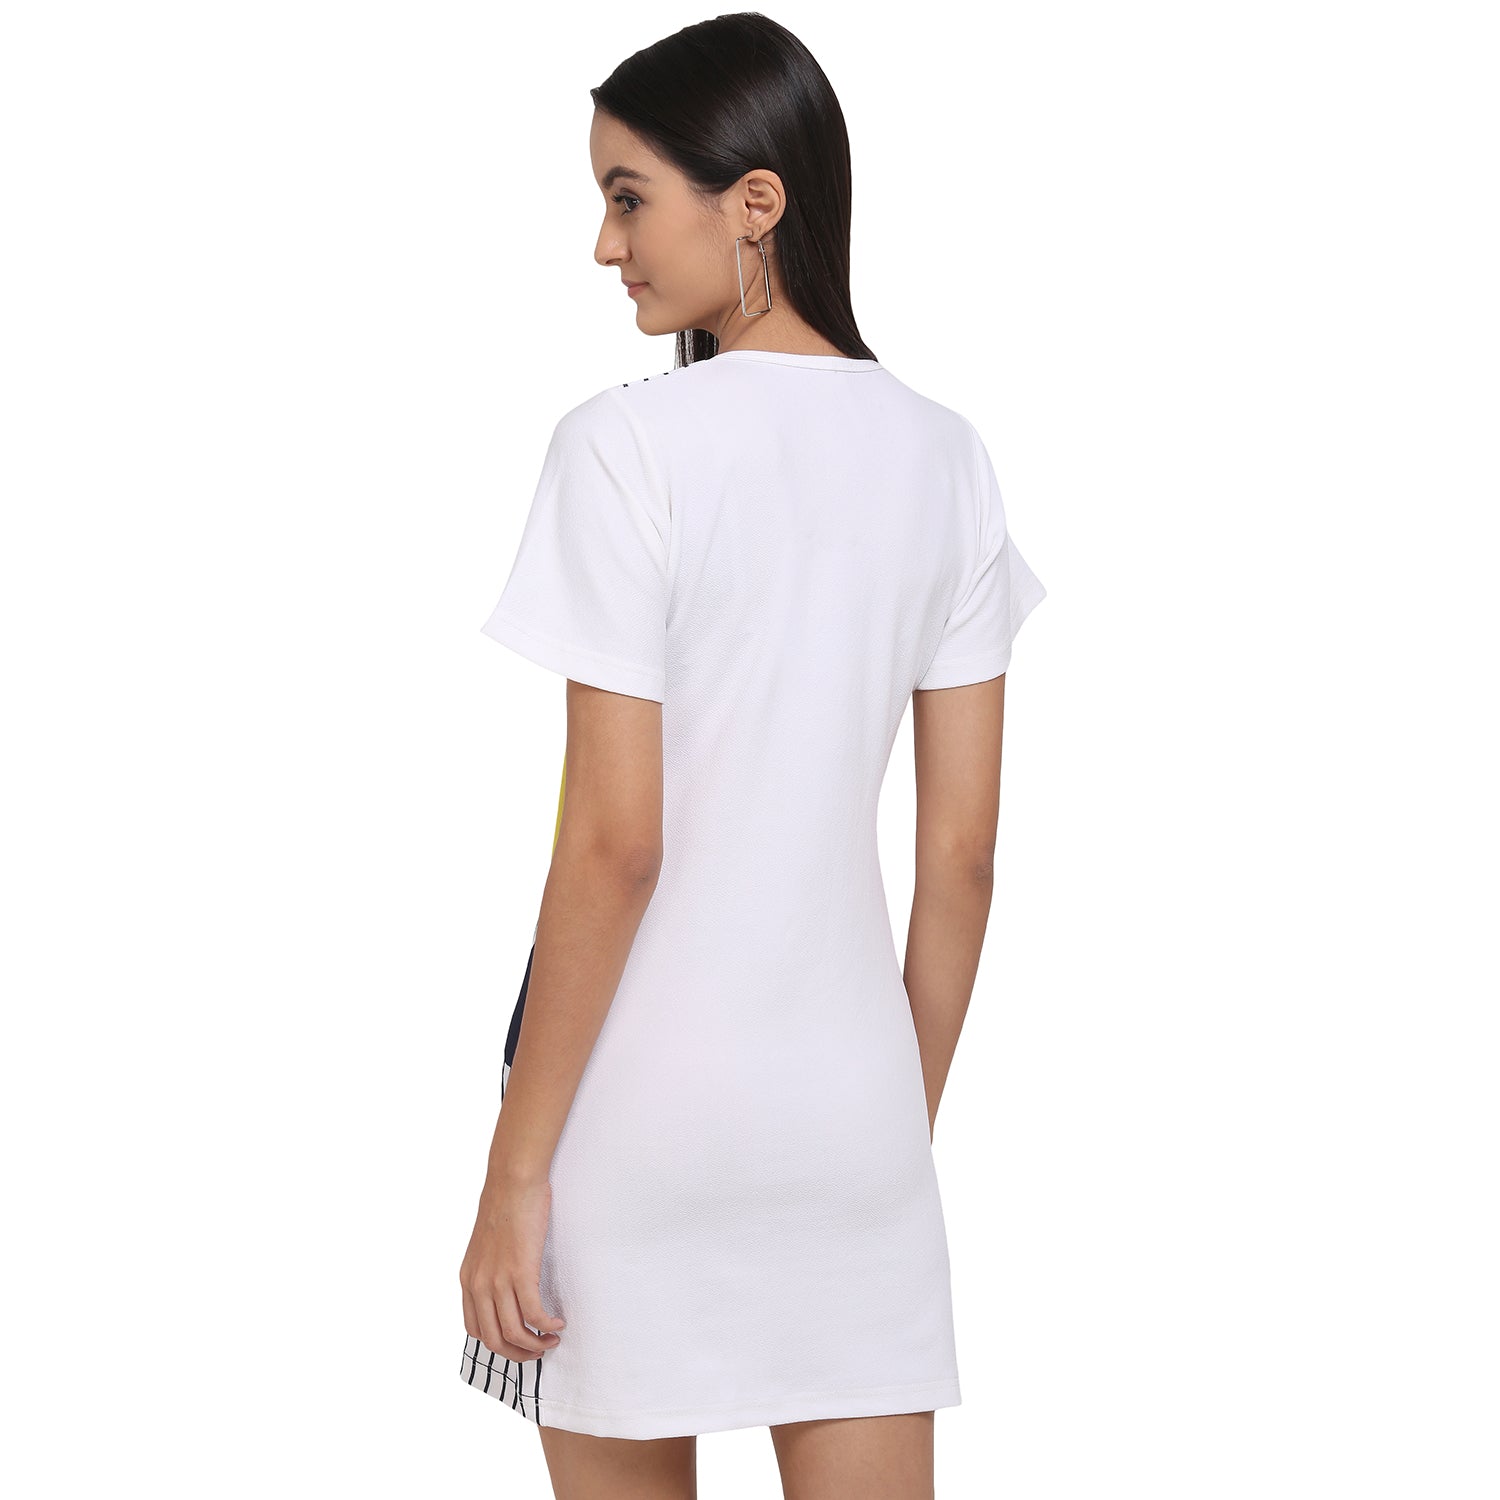 Women's Abstract Printed White Short Tunic - MESMORA FASHION